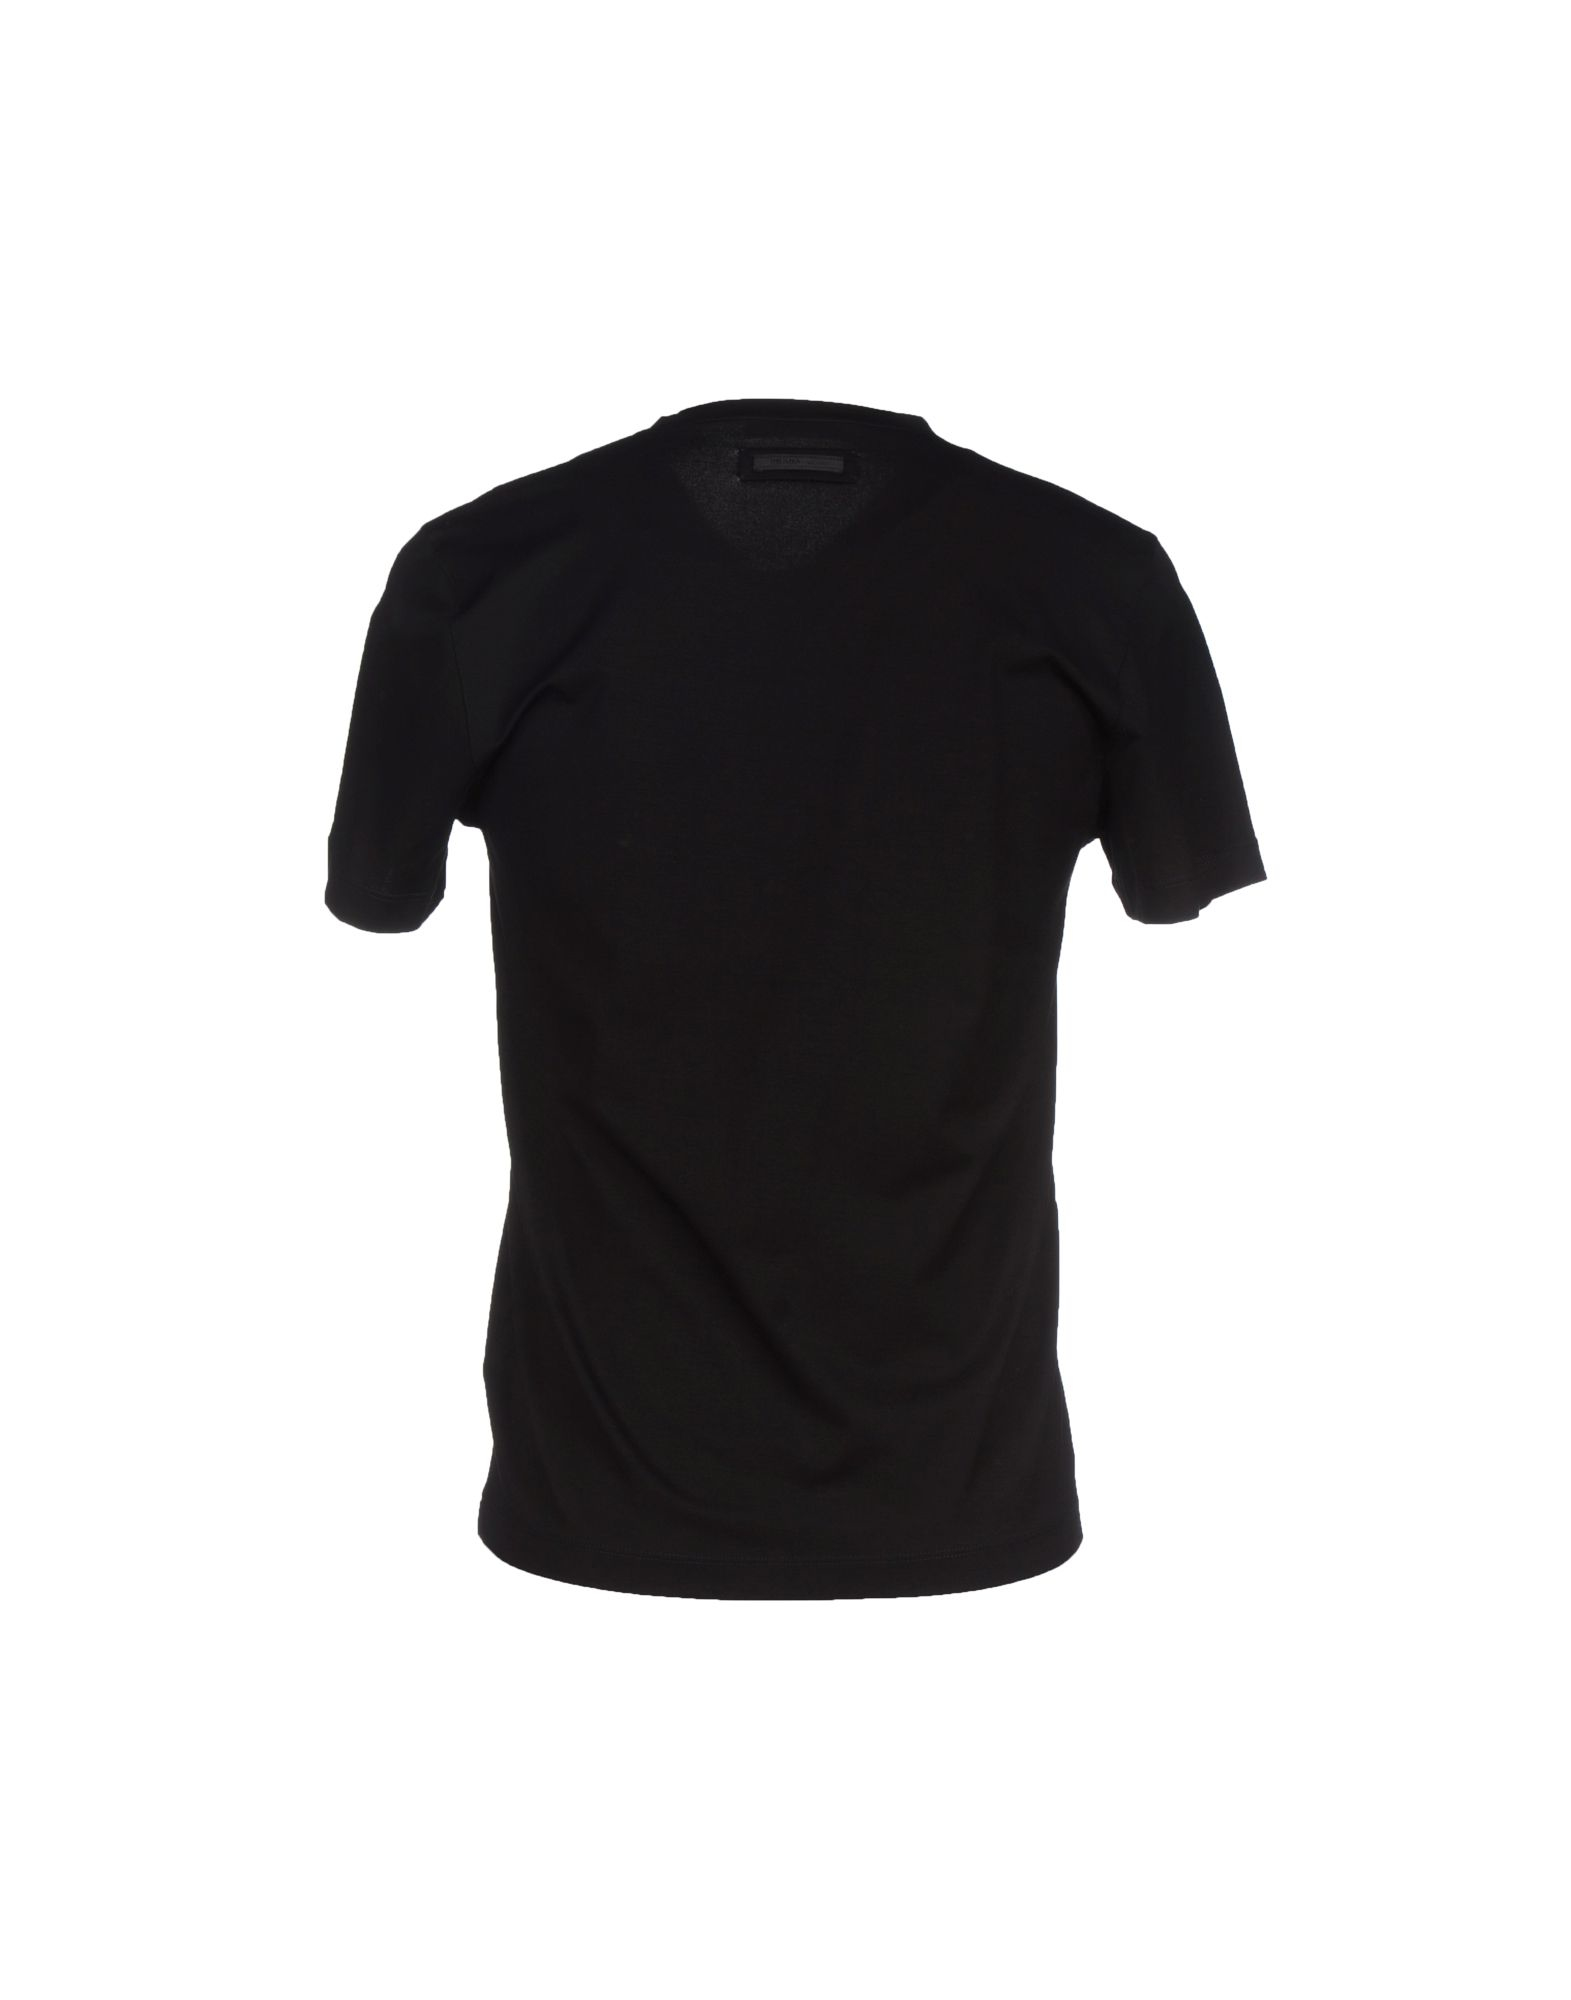 Prada Cotton T-shirt in Black for Men - Lyst